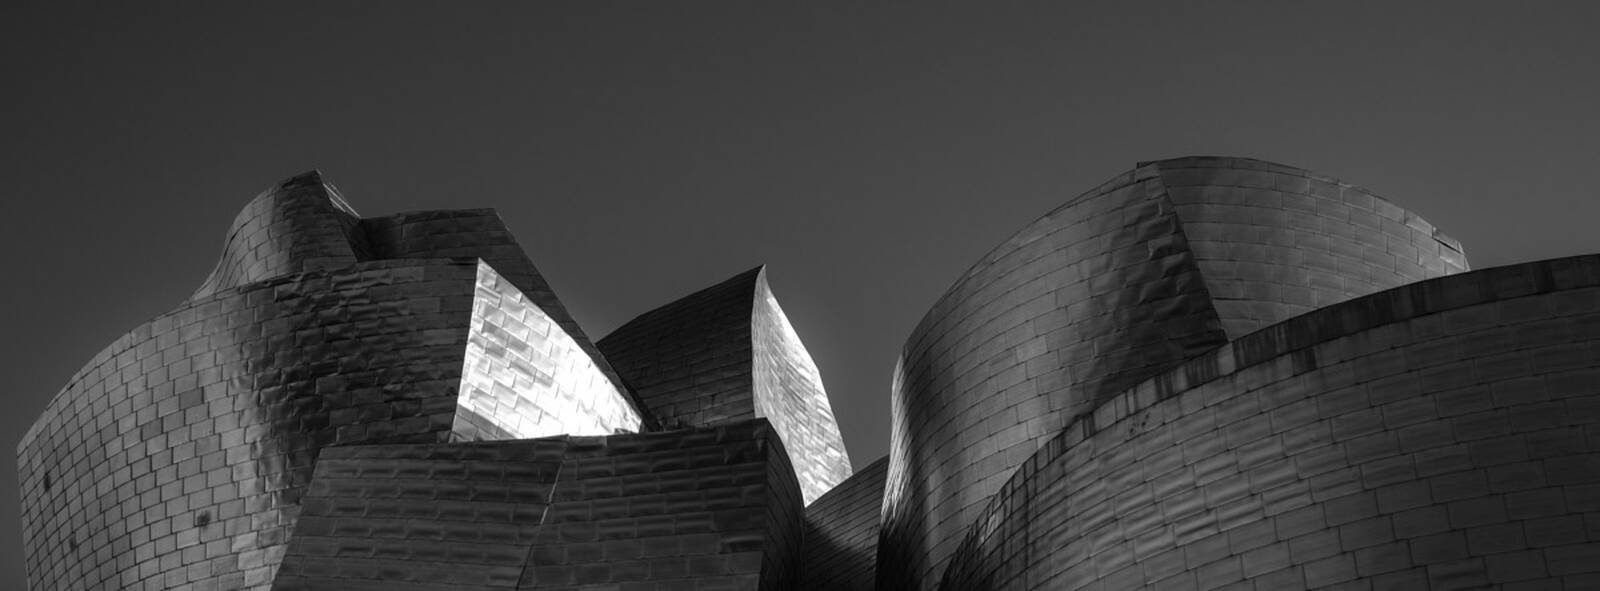 Image of Guggenheim Museum Bilbao by Mateusz Torbus